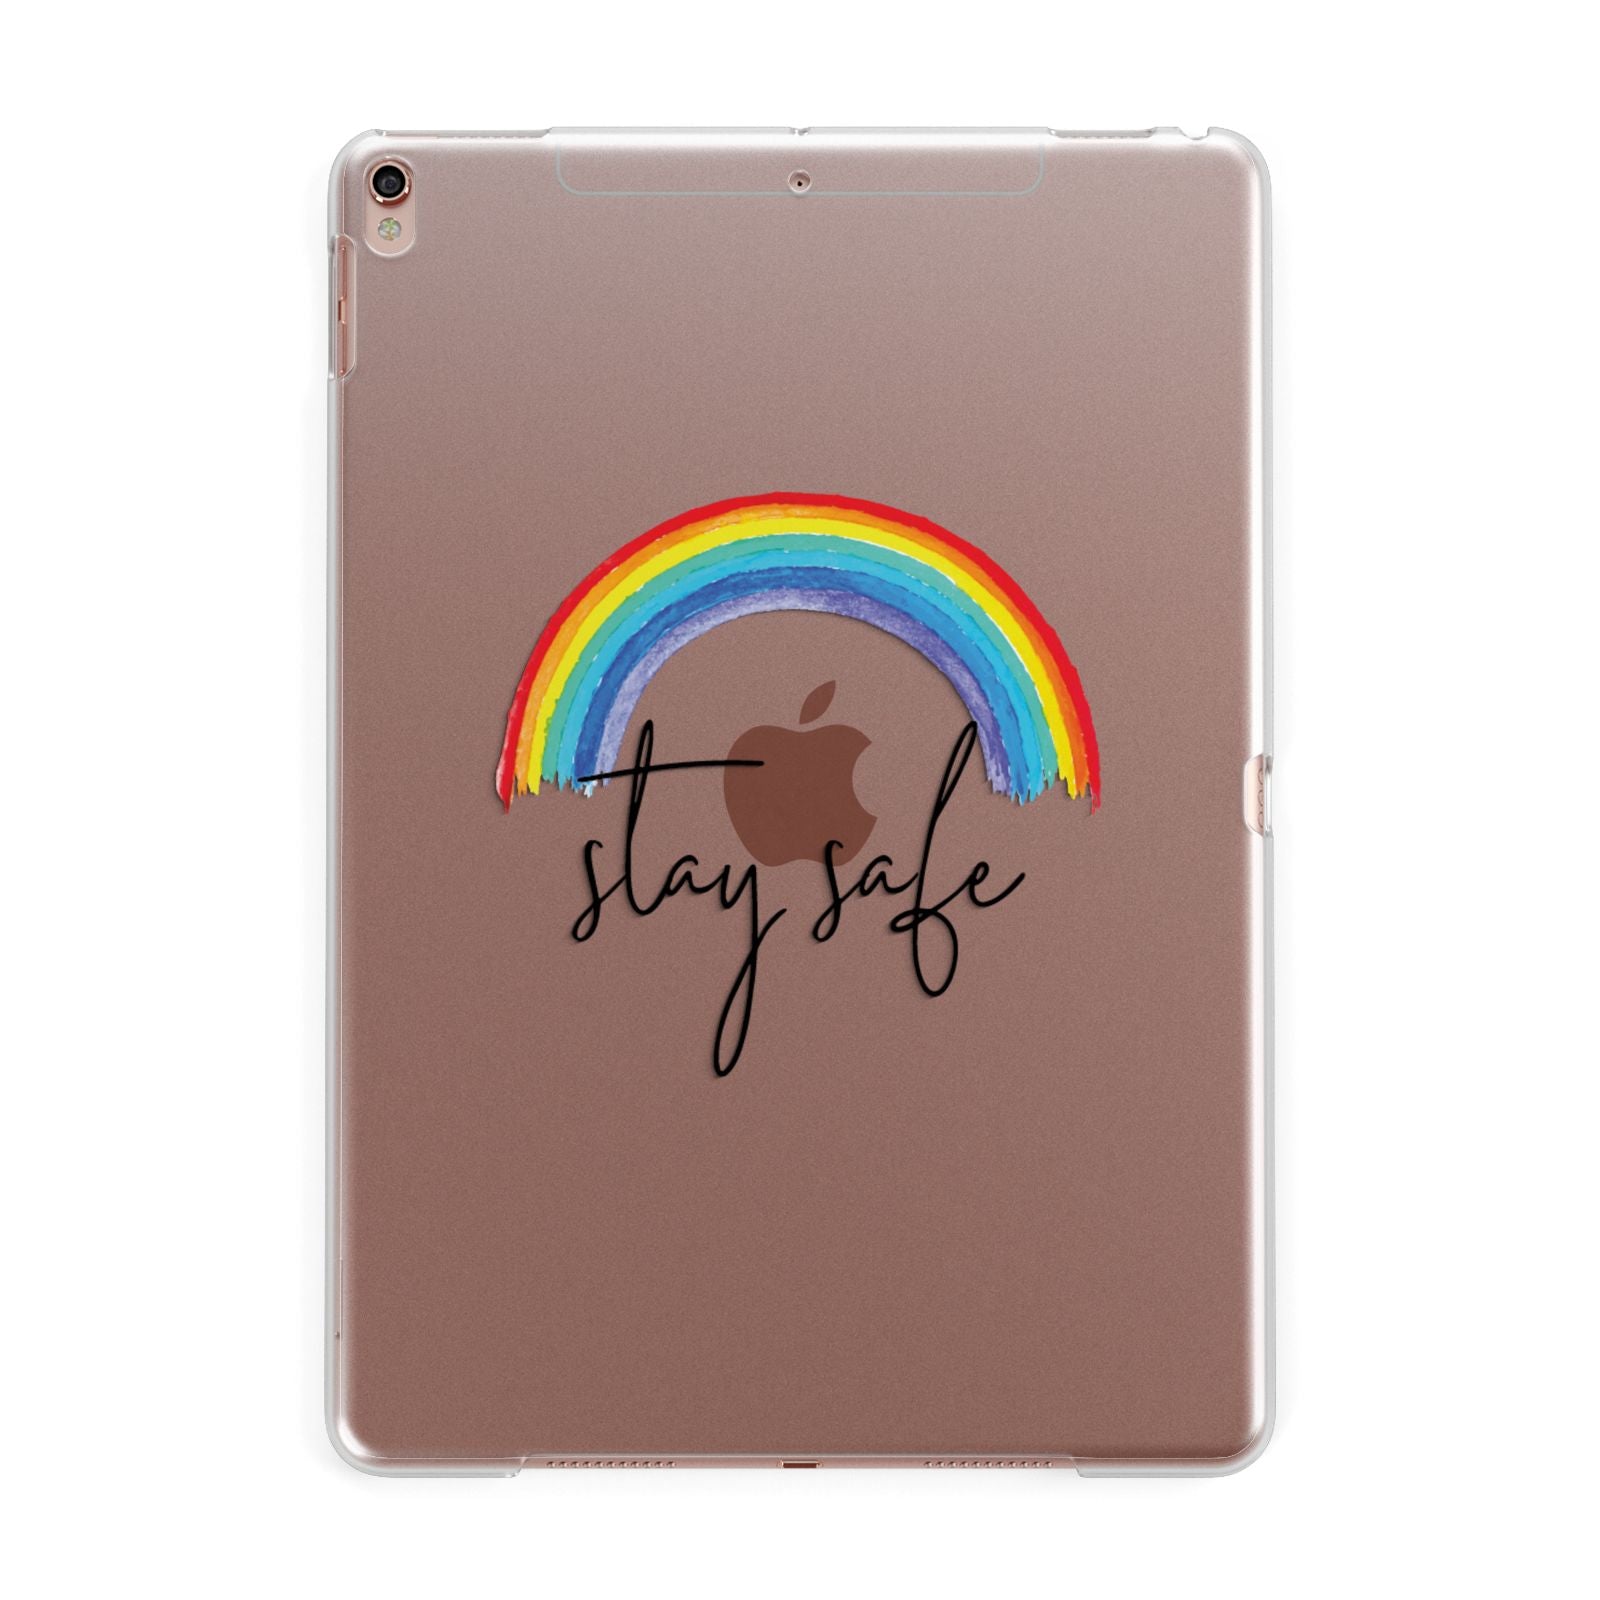 Stay Safe Rainbow Apple iPad Rose Gold Case